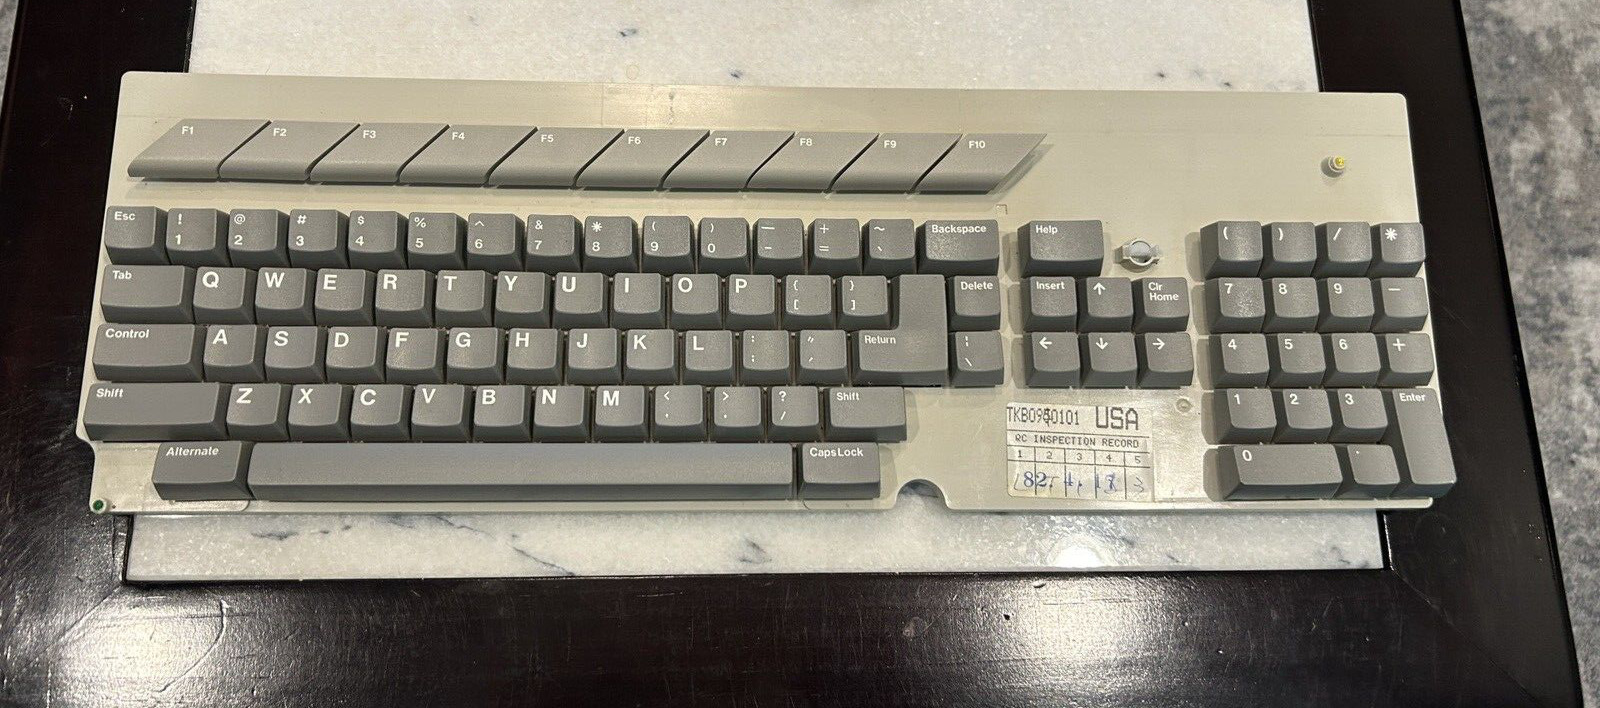 Atari Falcon 030 Computer Keyboard Missing 1 Key - WORKING (C070777-002 REV A)